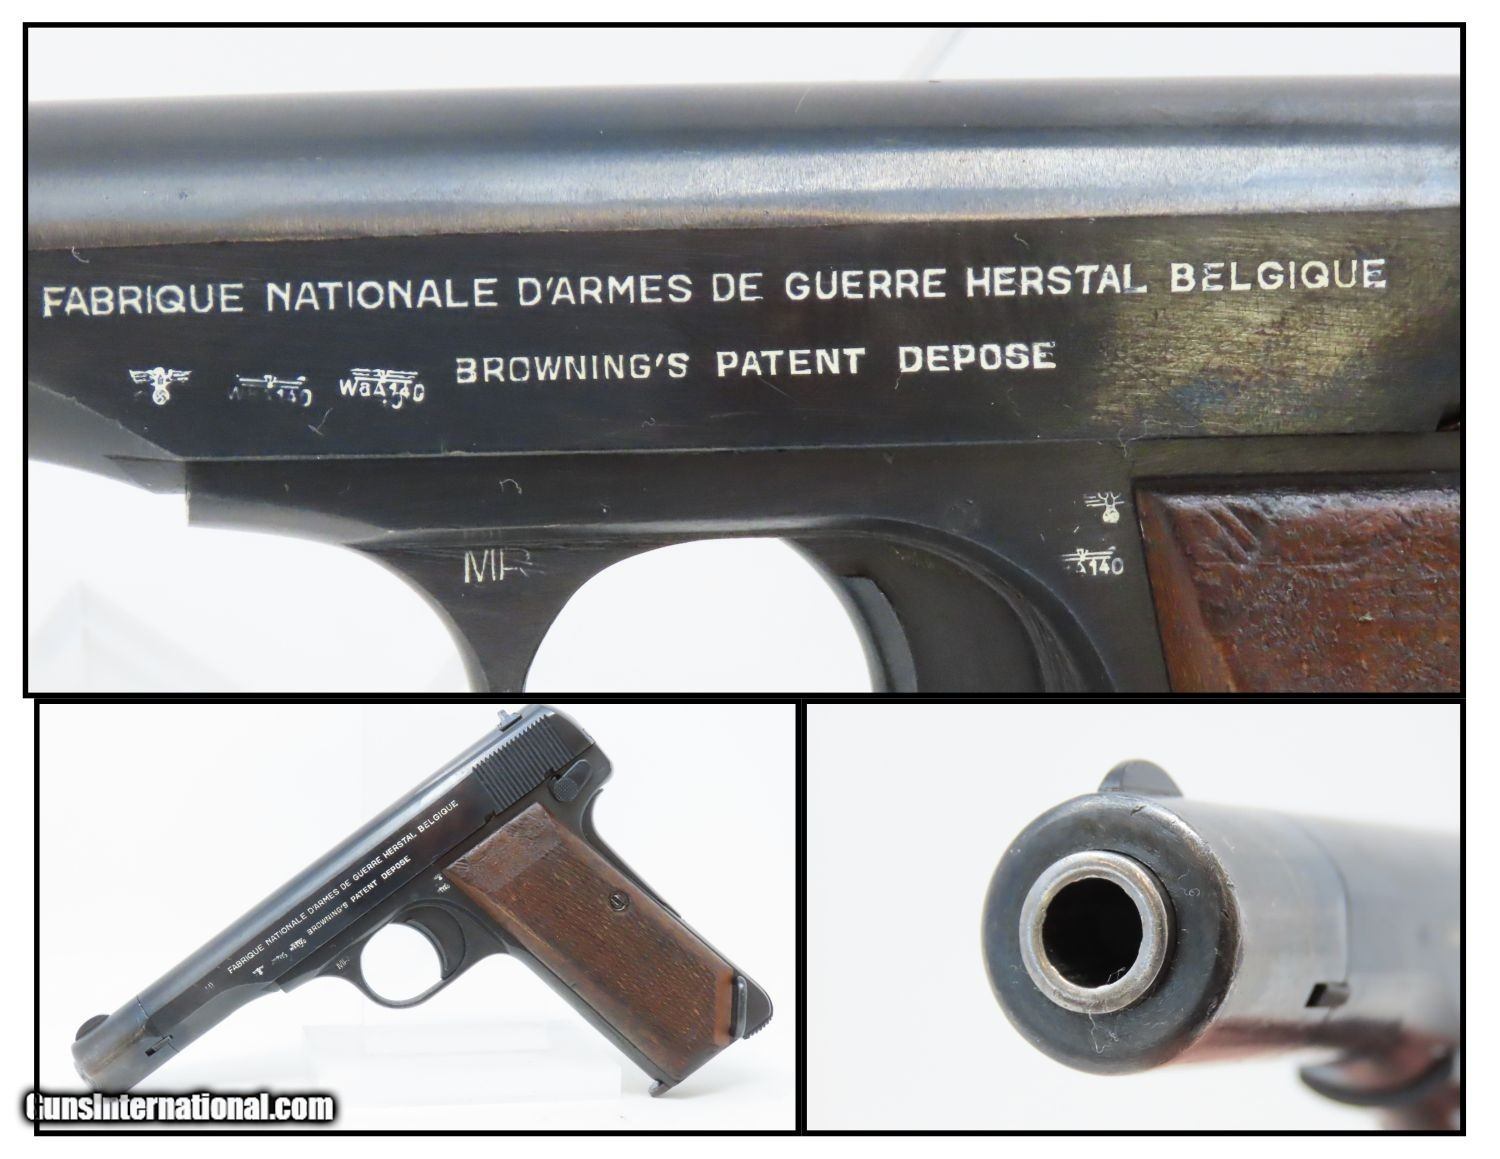 Made in Belgium by FN : r/guns